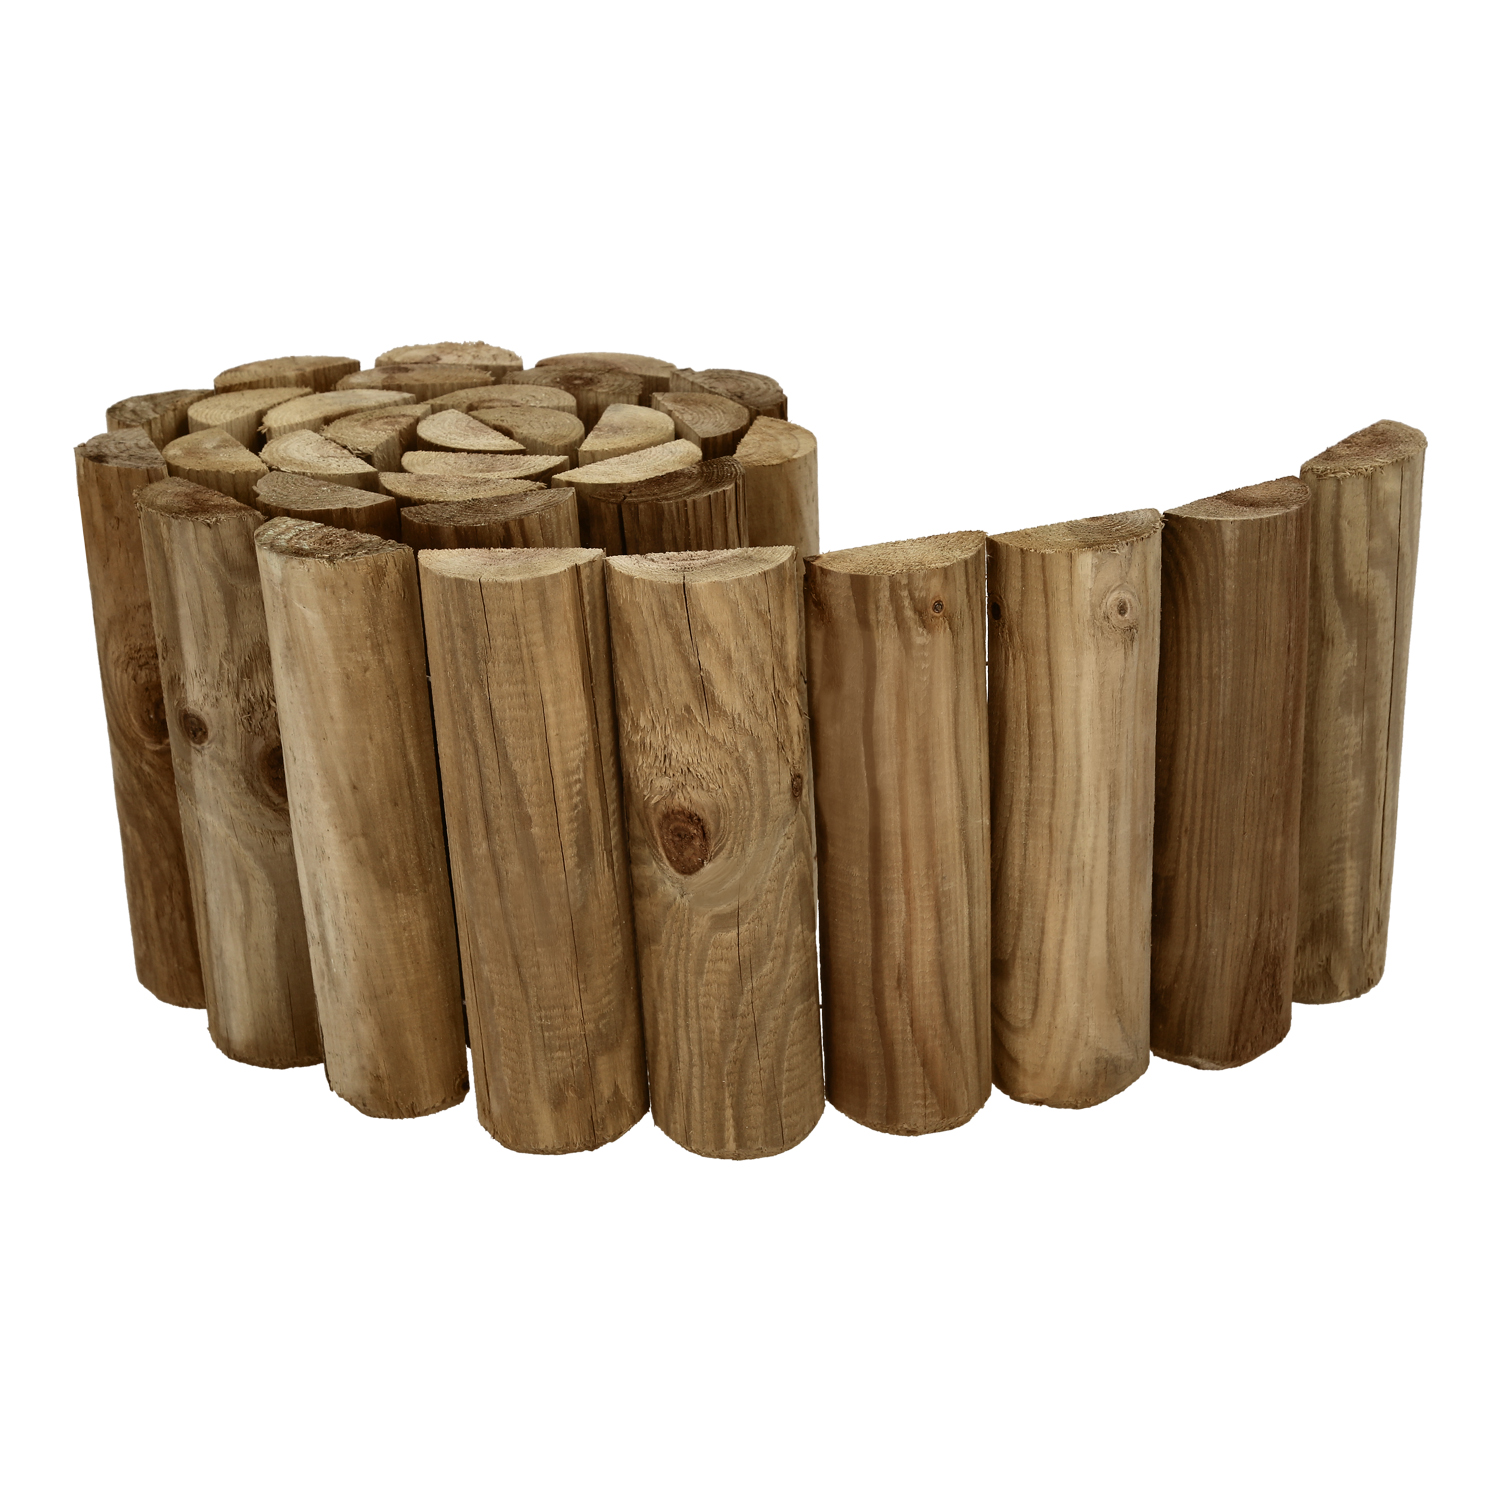 Bordura madera 6x20 (Alt.) cm. Longitud 2 metros. Bordo madera Flexible, Rollborder madera. MaderaTr